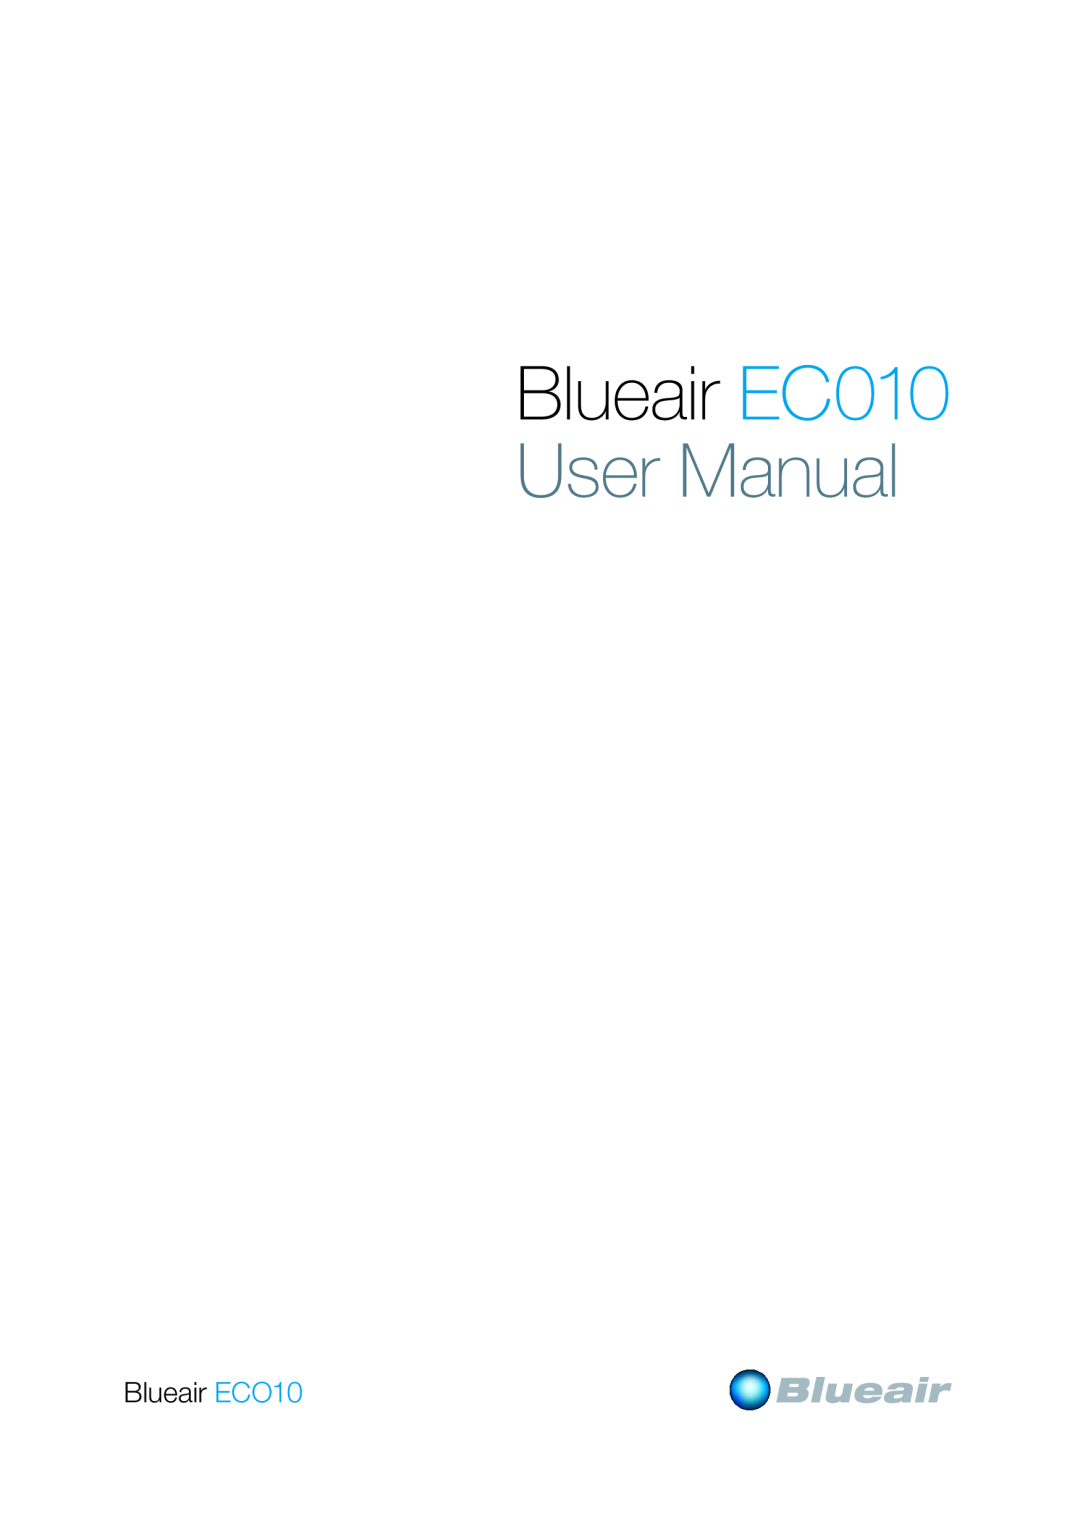 Blueair user manual Blueair ECO10, Blueair EC010 